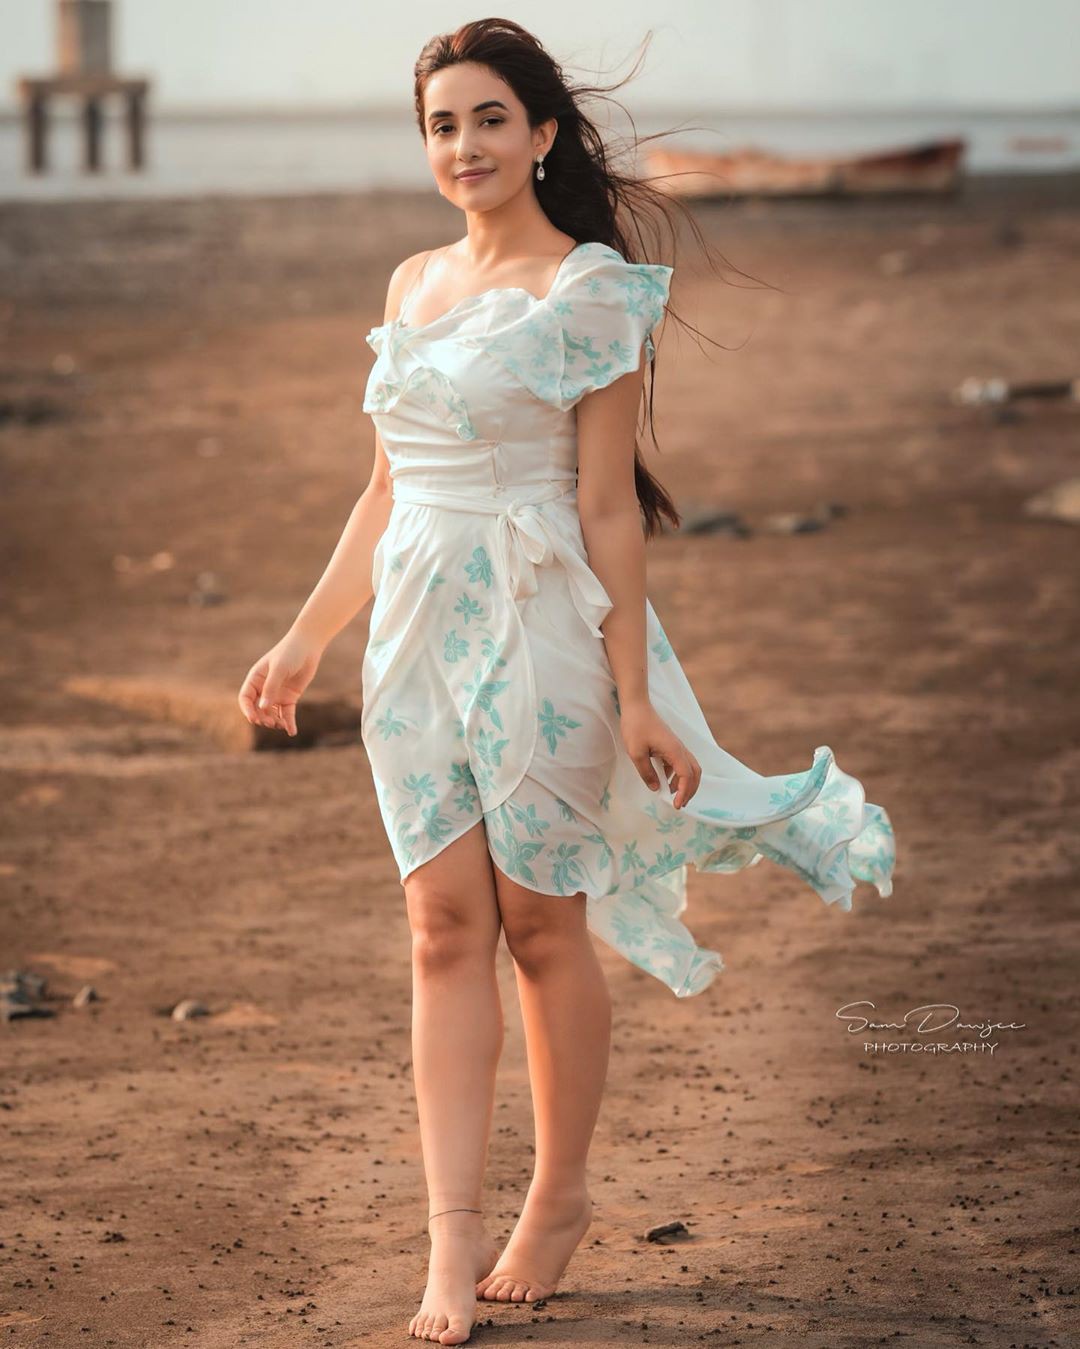 Xxx Aditi Budhathoki - Teens most searched fashion model, Aditi Budhathoki | Aditi Budhathoki  Instagram Pics | Aditi Budhathoki, Hot Instagram Models, Mandy Moore